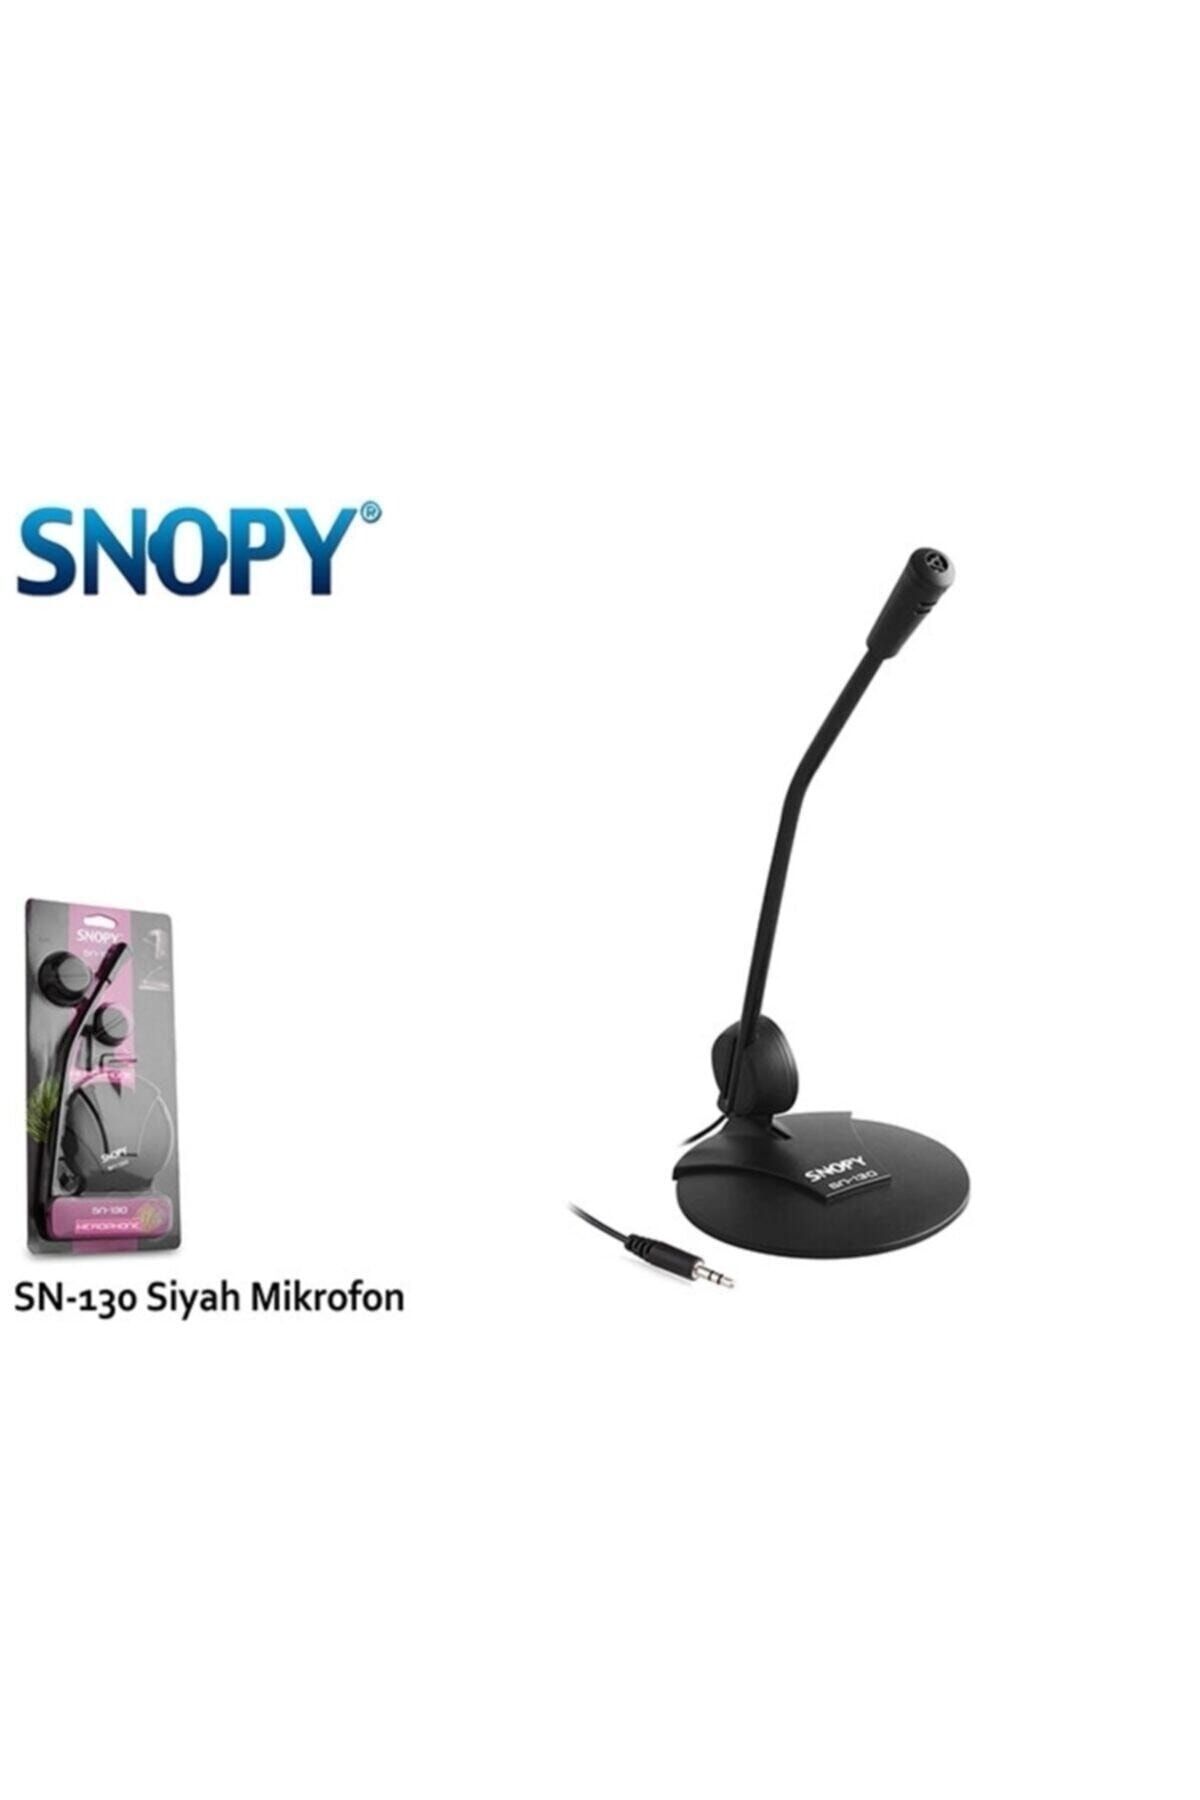 Snopy Sn-130 Siyah Mikrofon